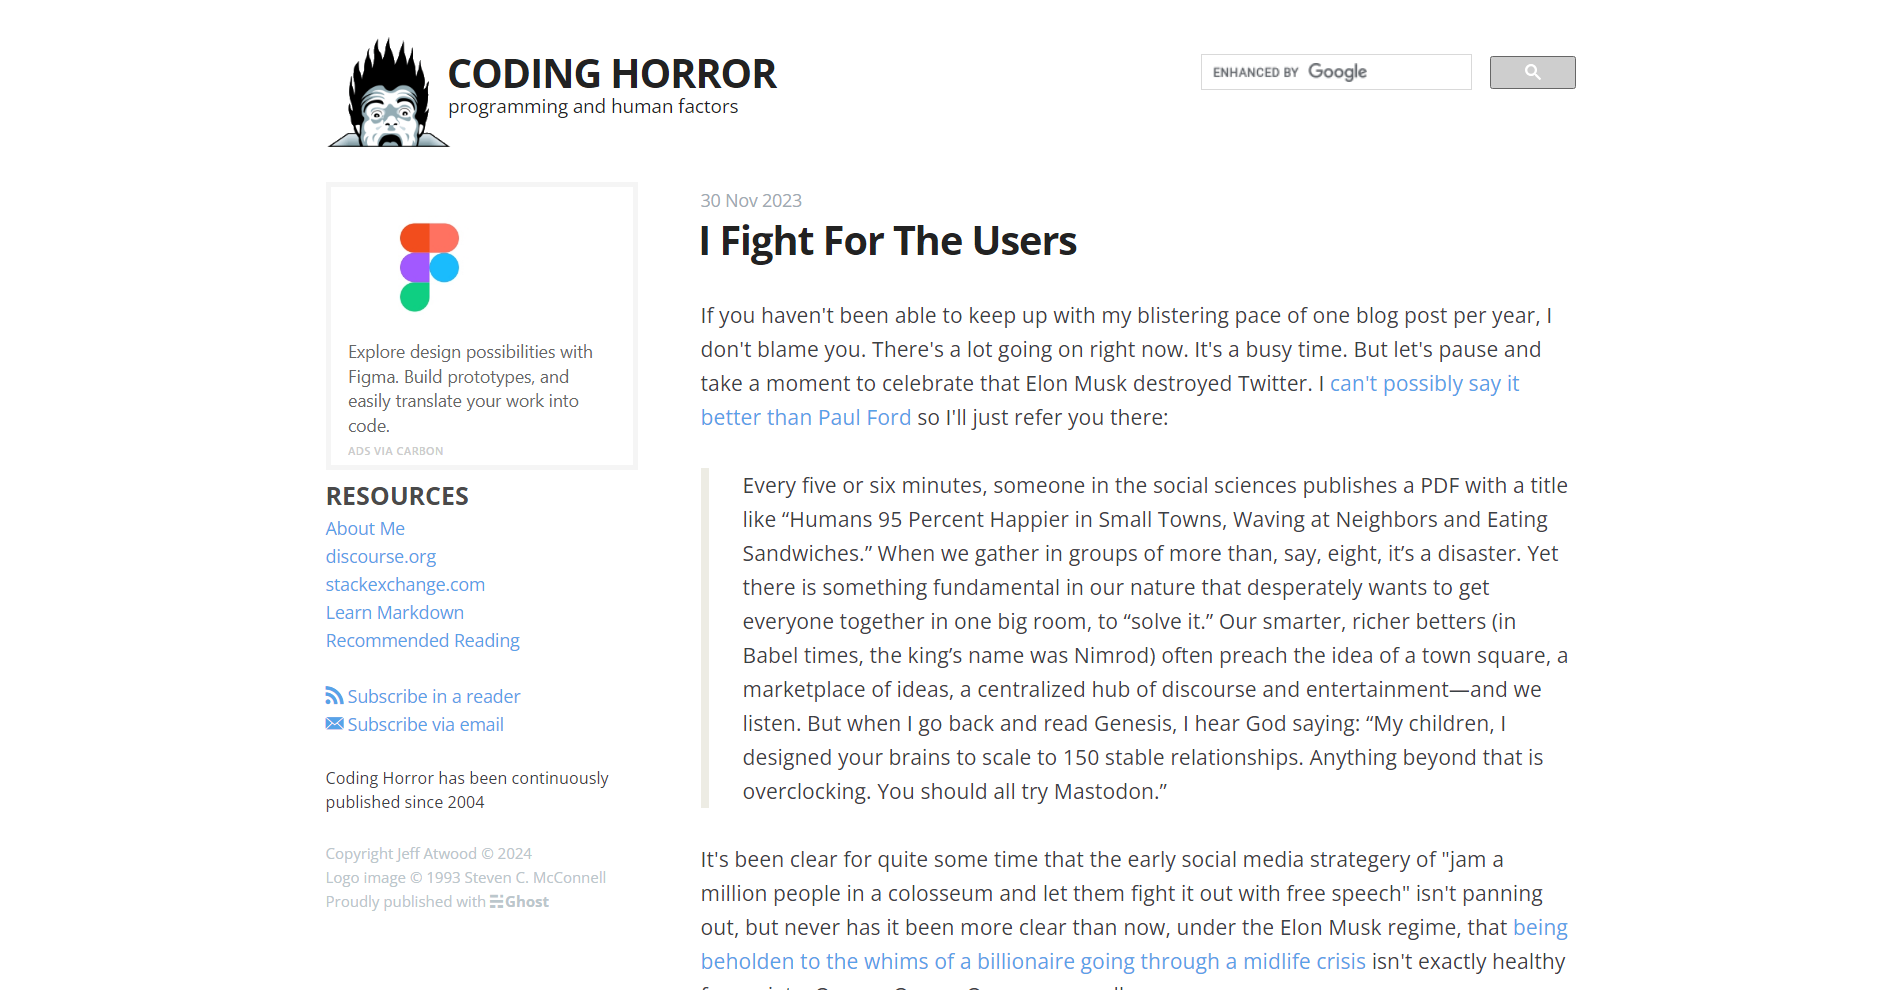  Coding Horror: Programming blog and website